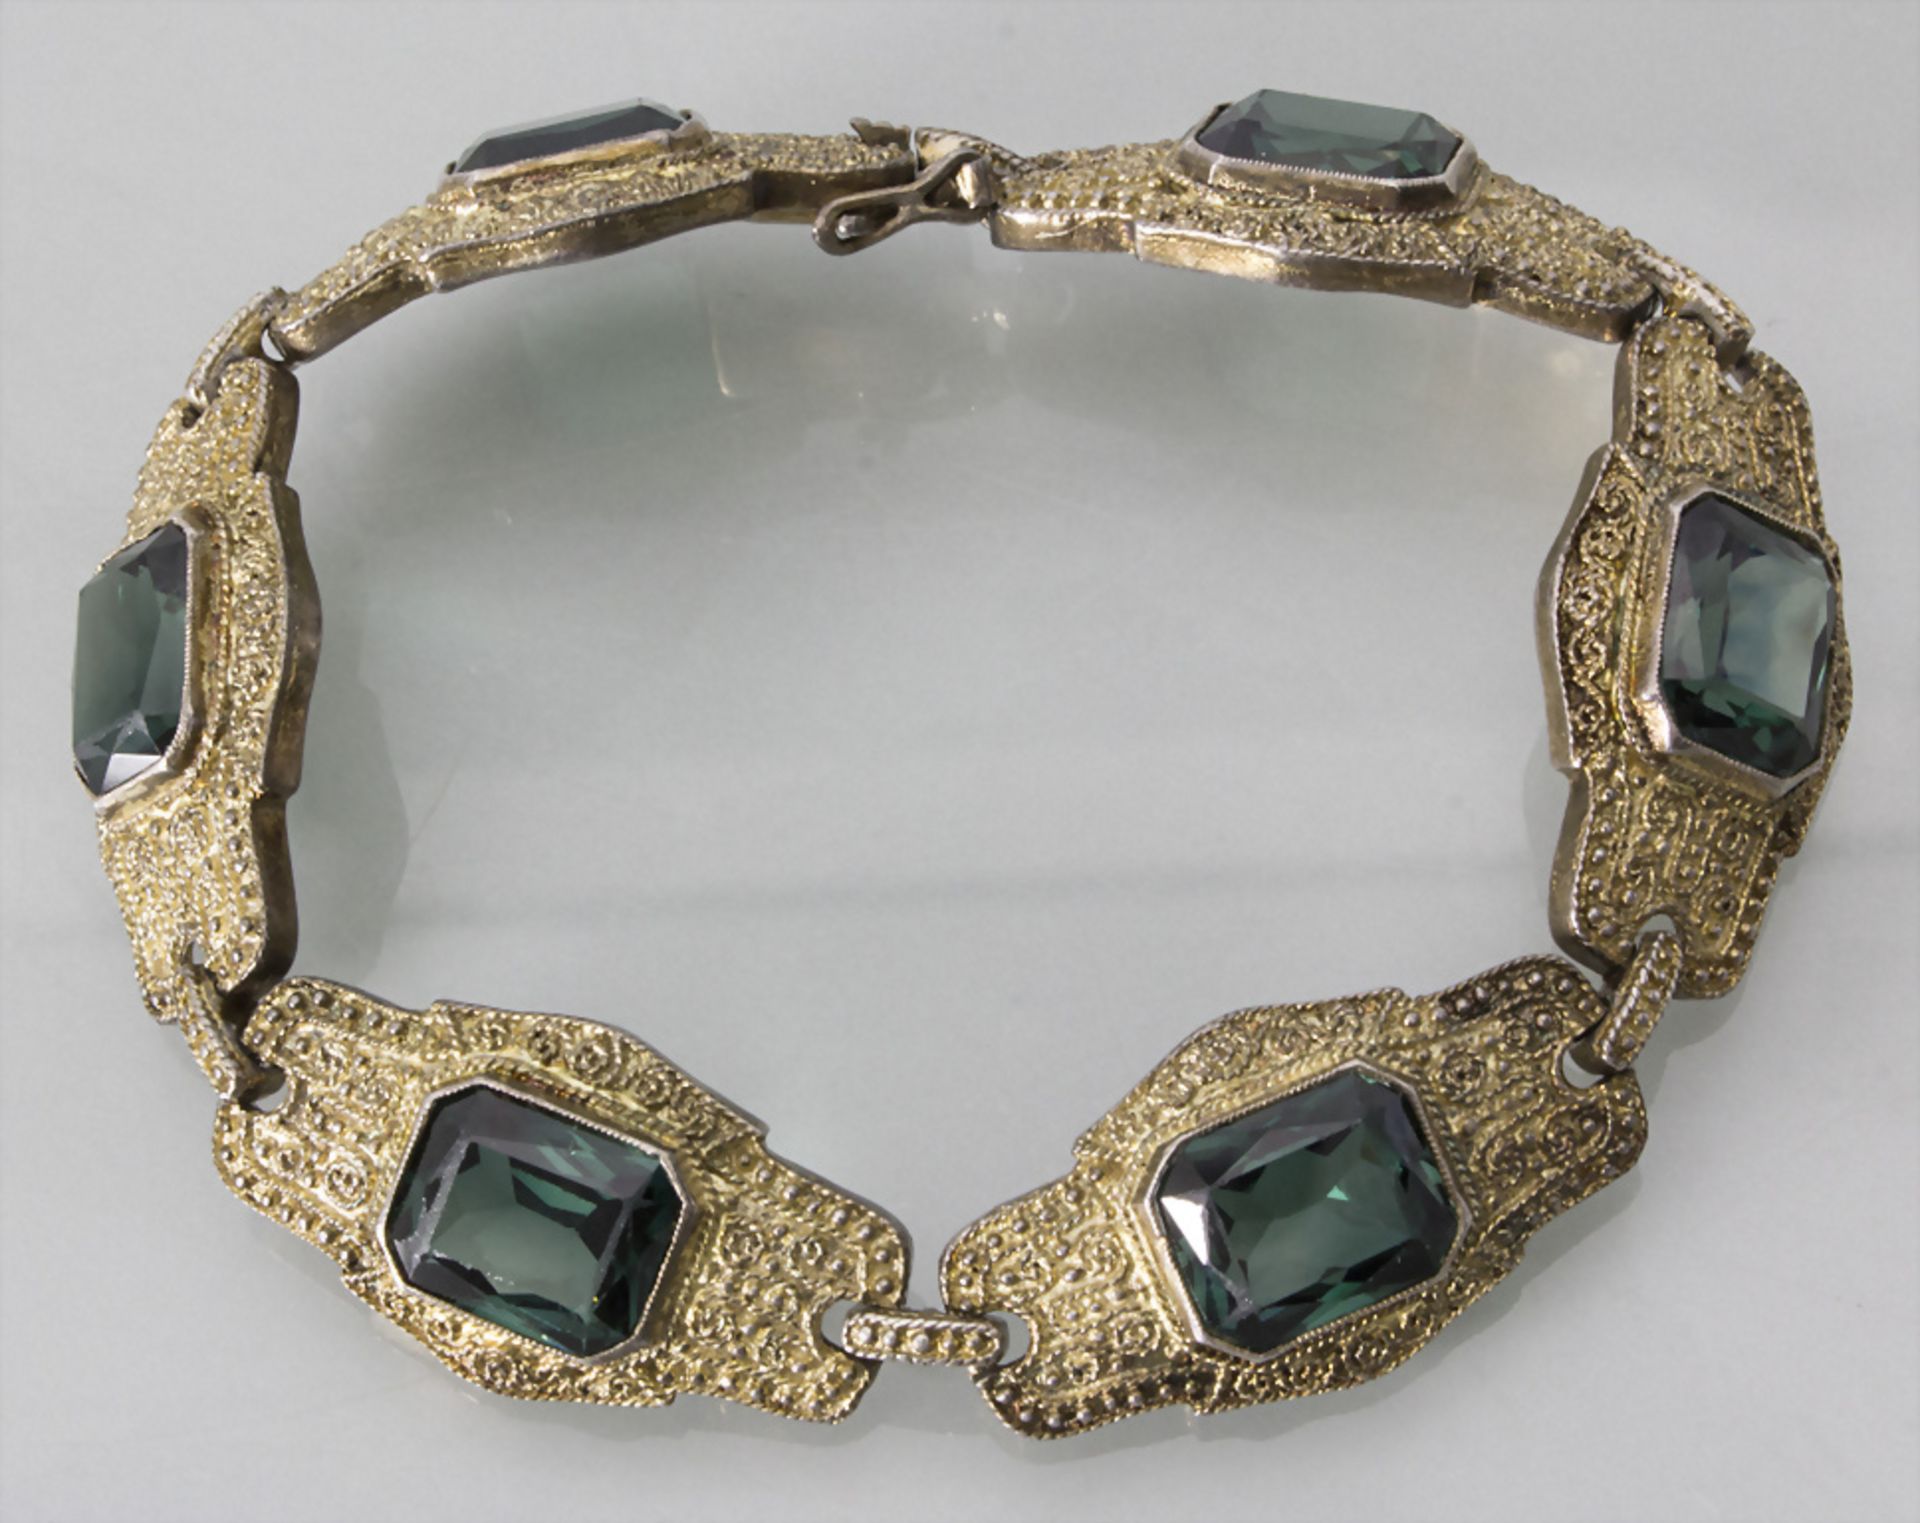 Art Déco Armband / An Art Deco silver bracelet, wohl Pforzheim, um 1925